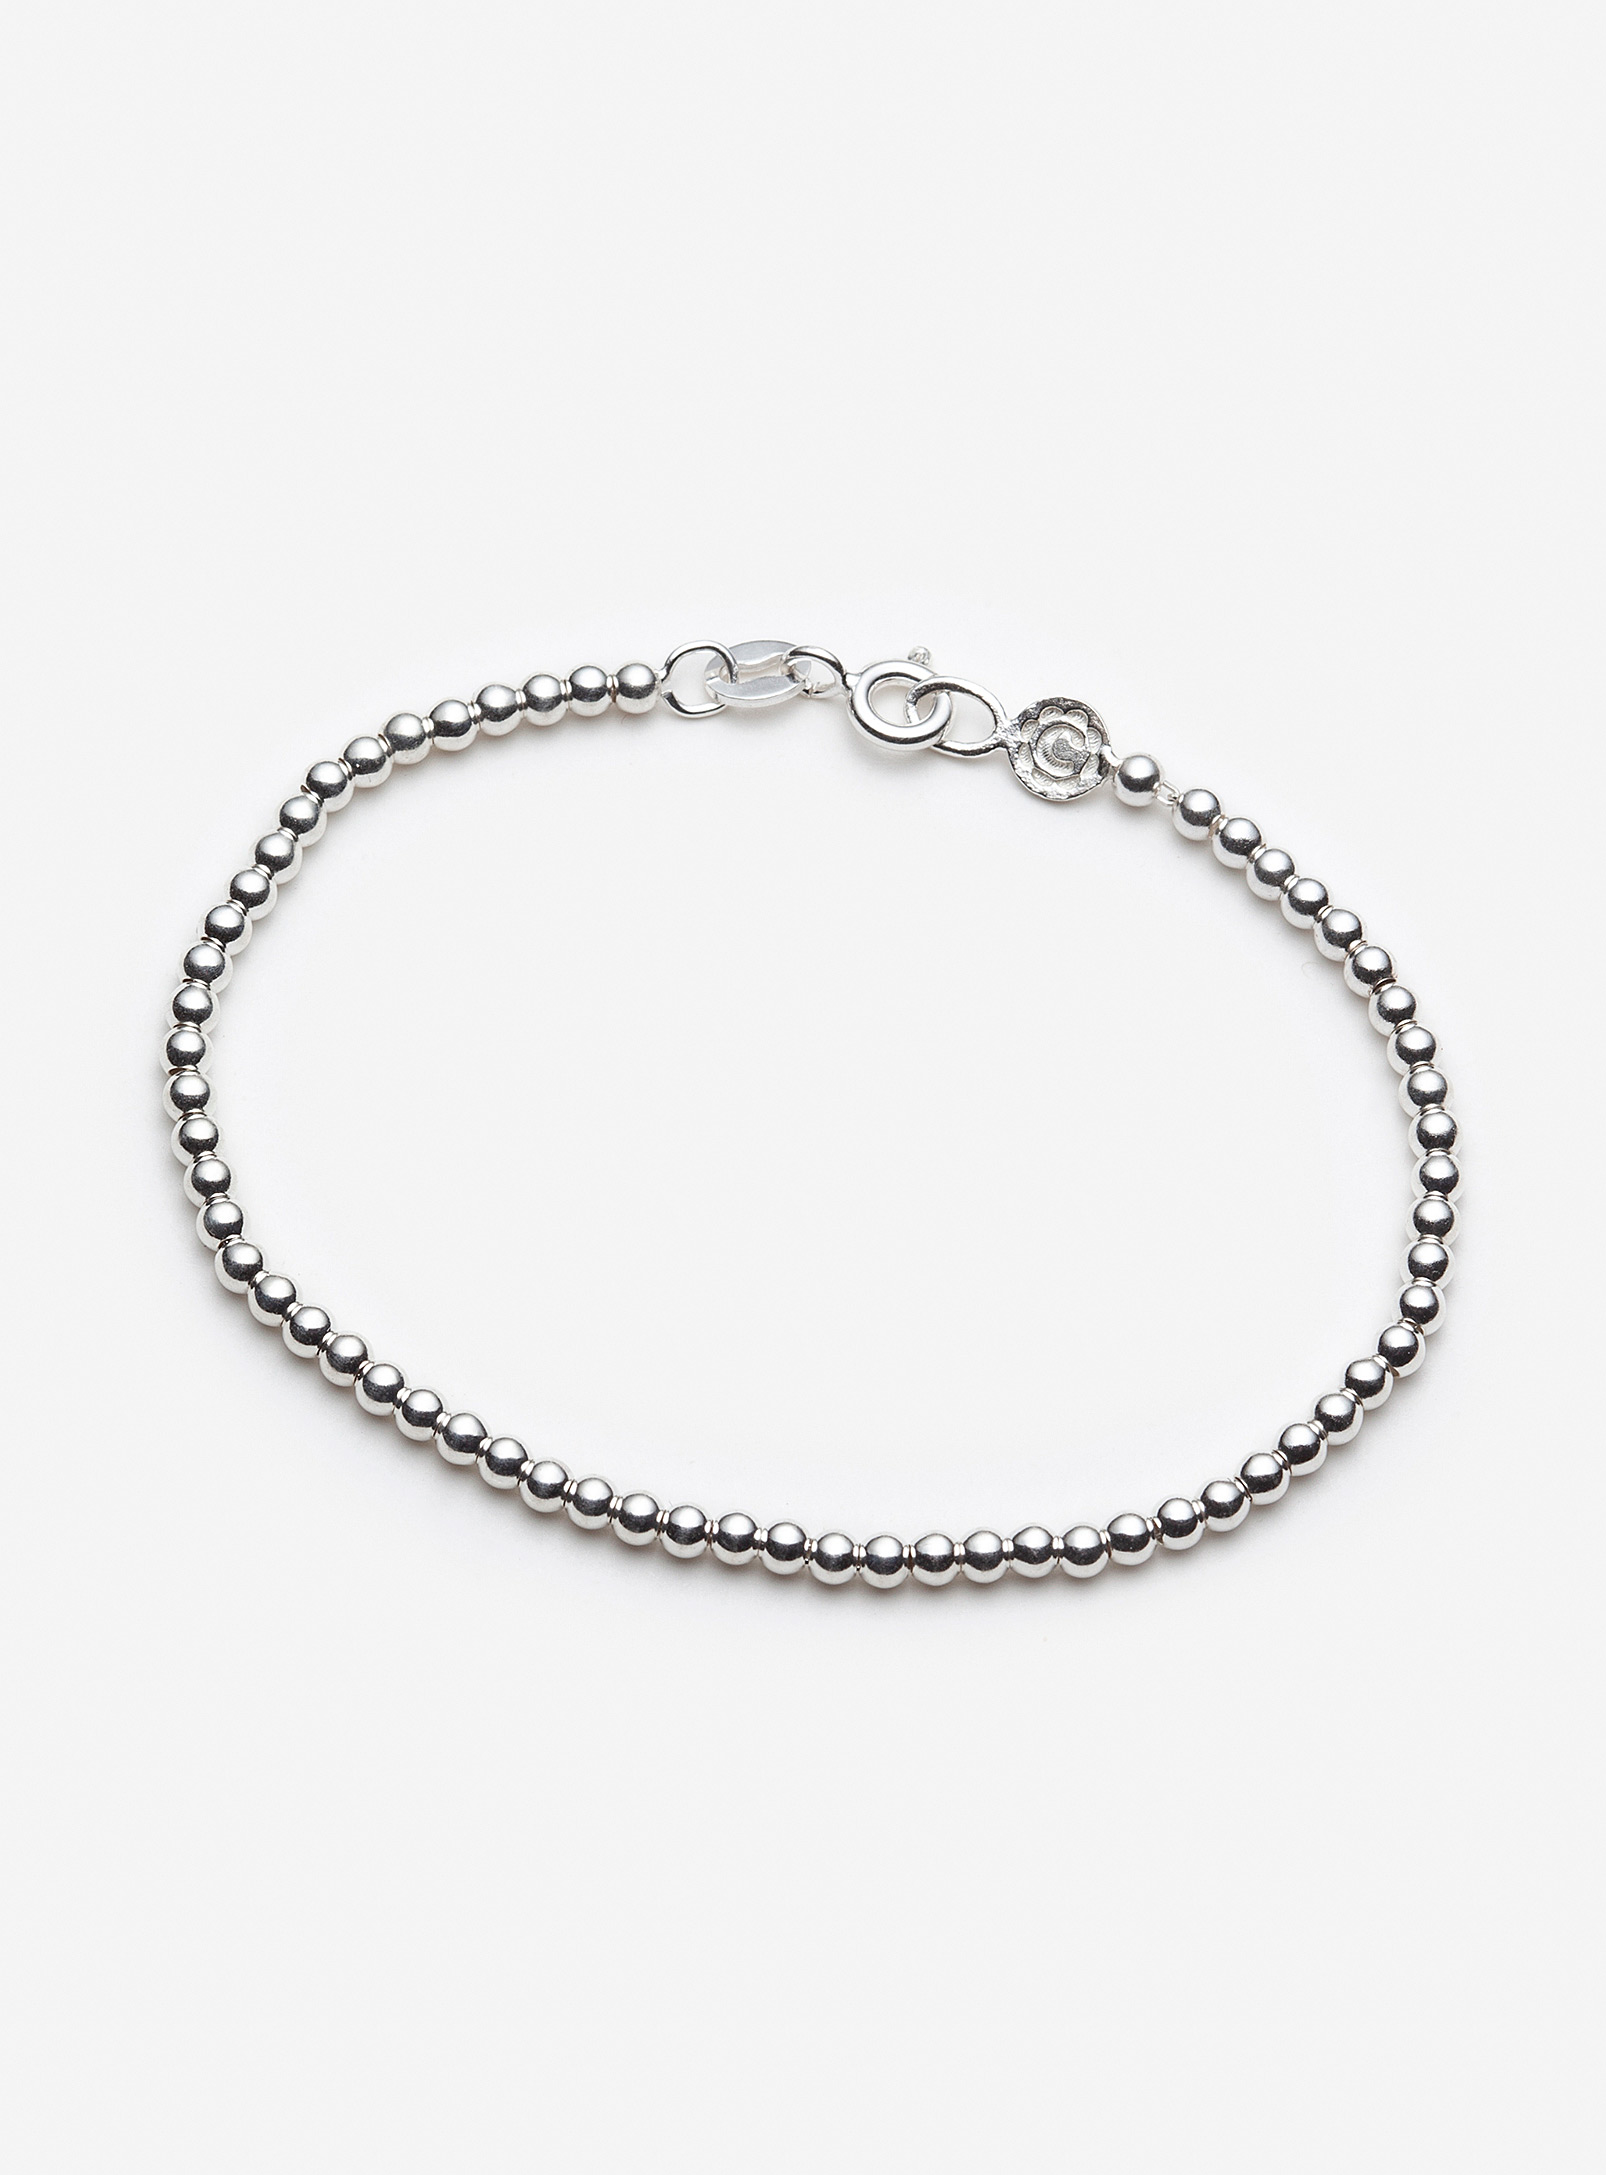 Camillette - Le bracelet petites billes en argent sterling